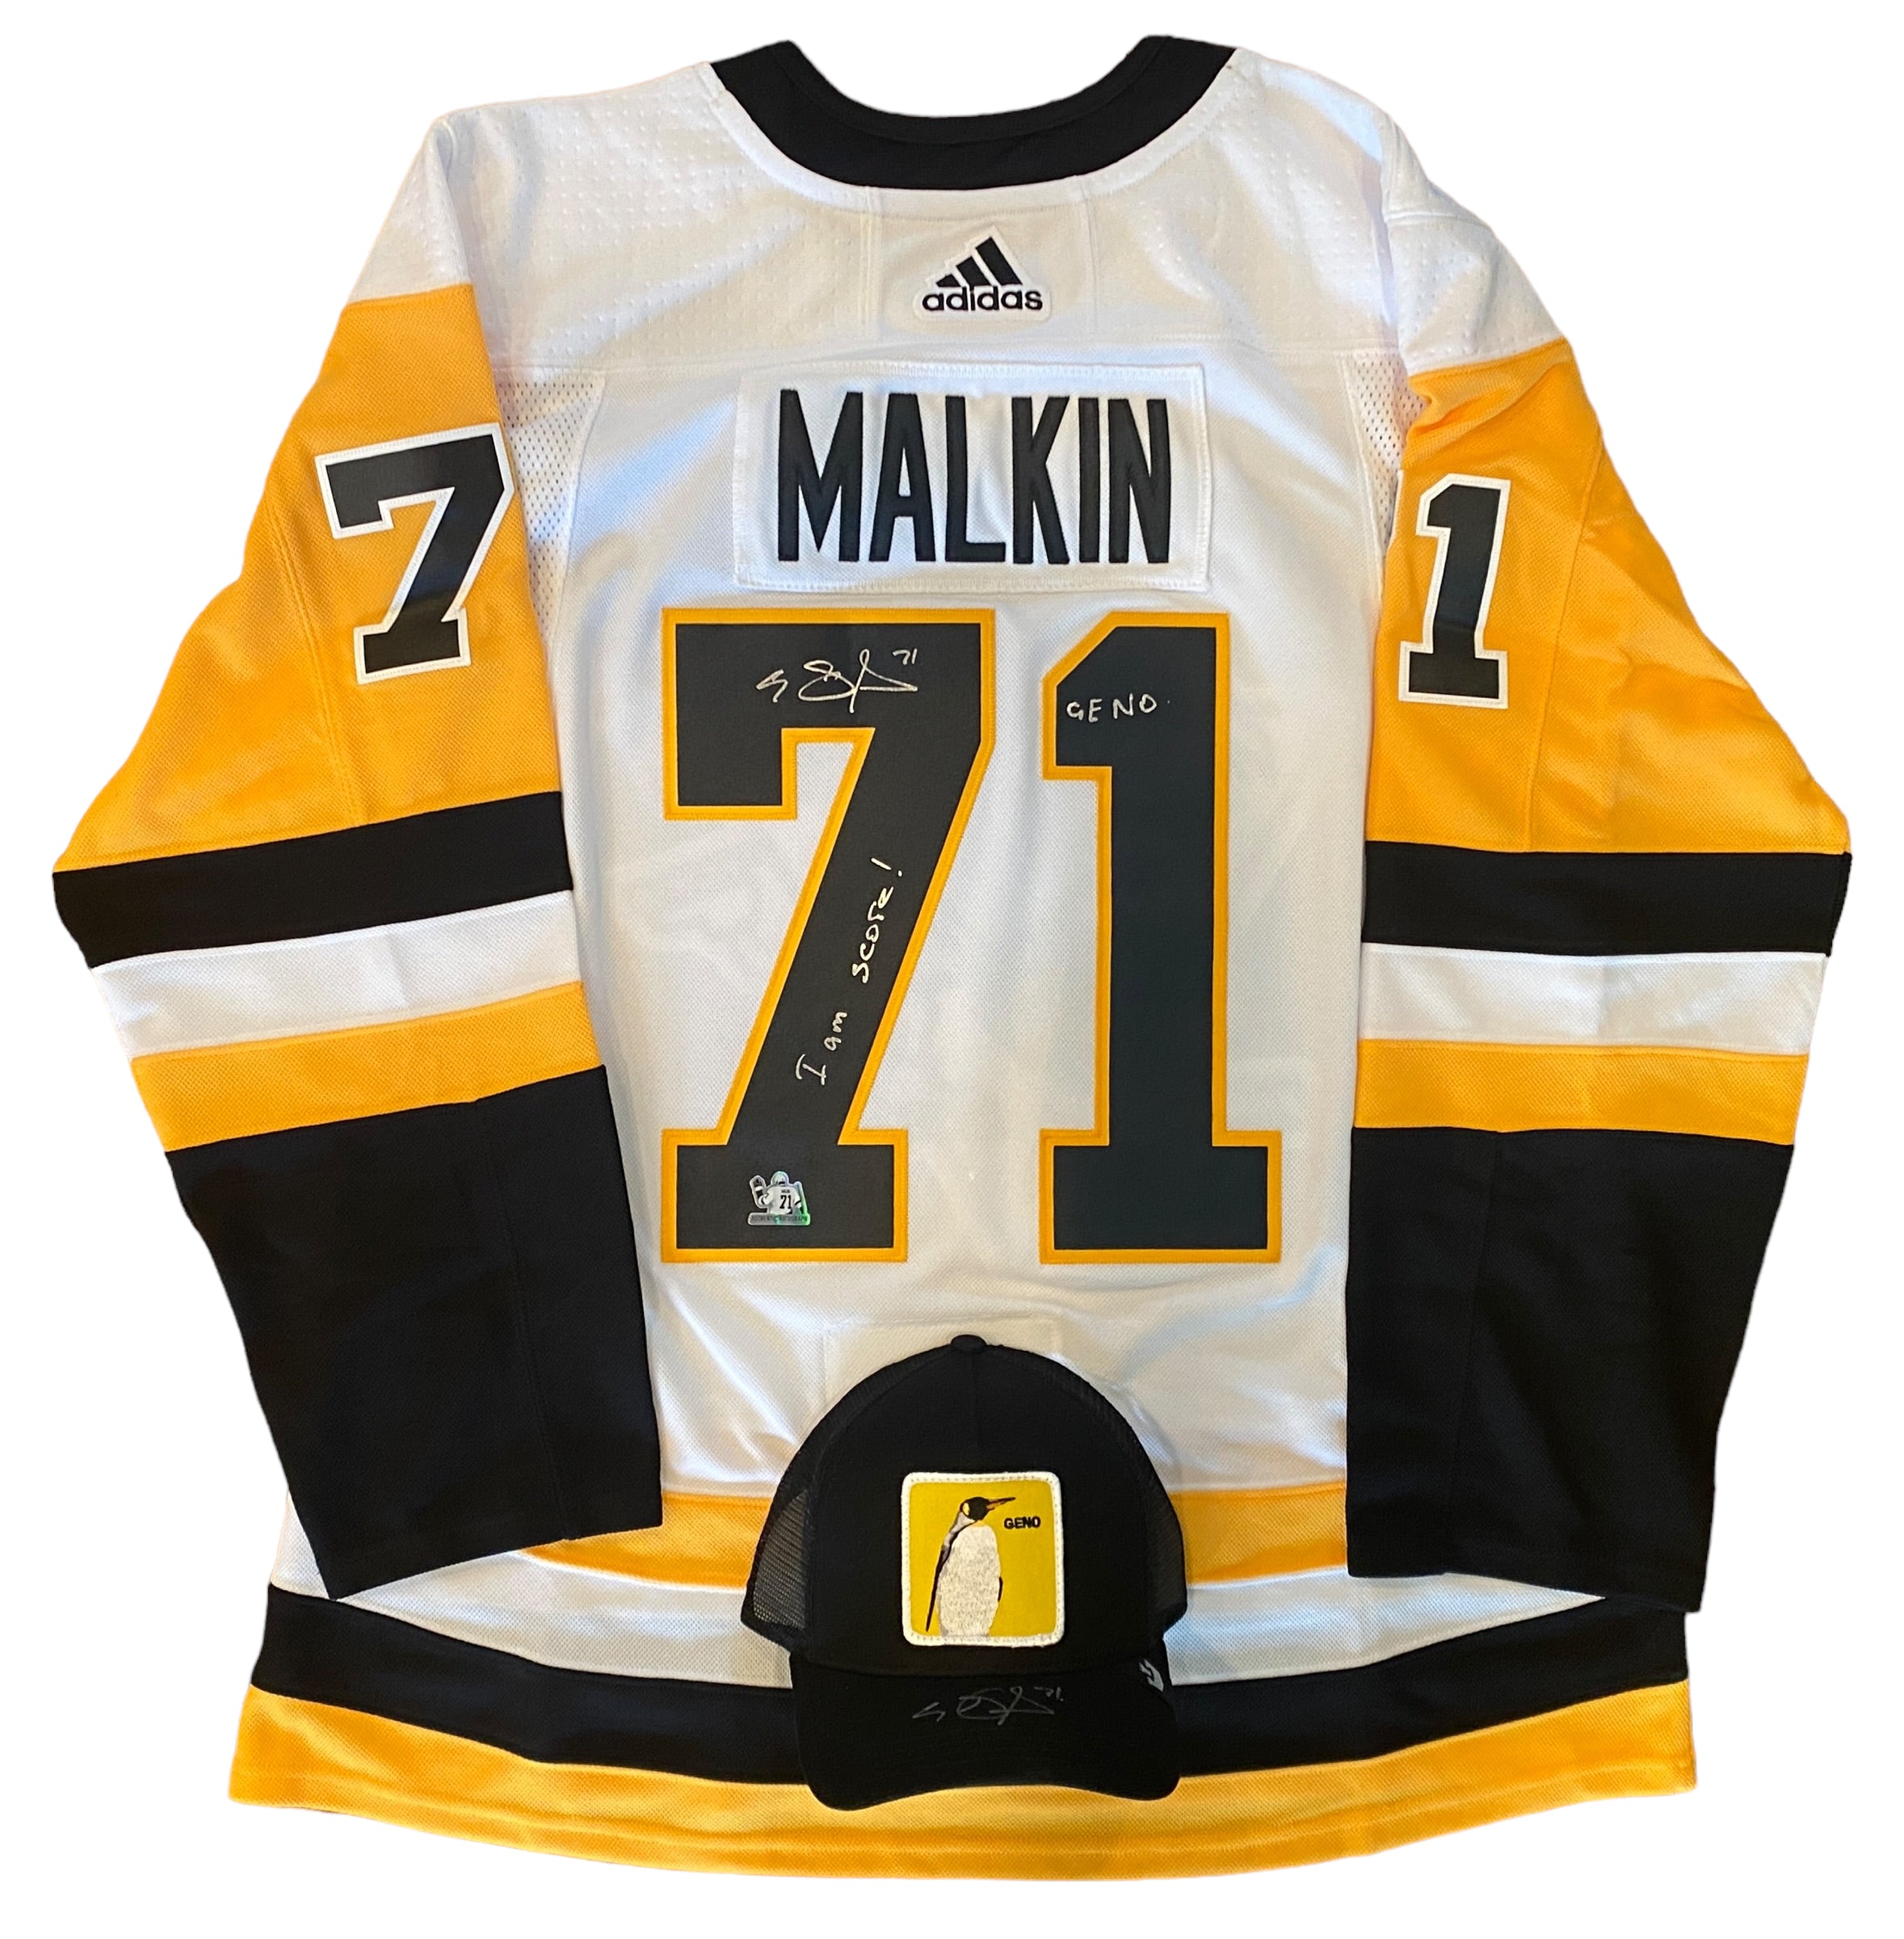 Evgeni Malkin Signed Pittsburgh Penguins White Reebok Jersey